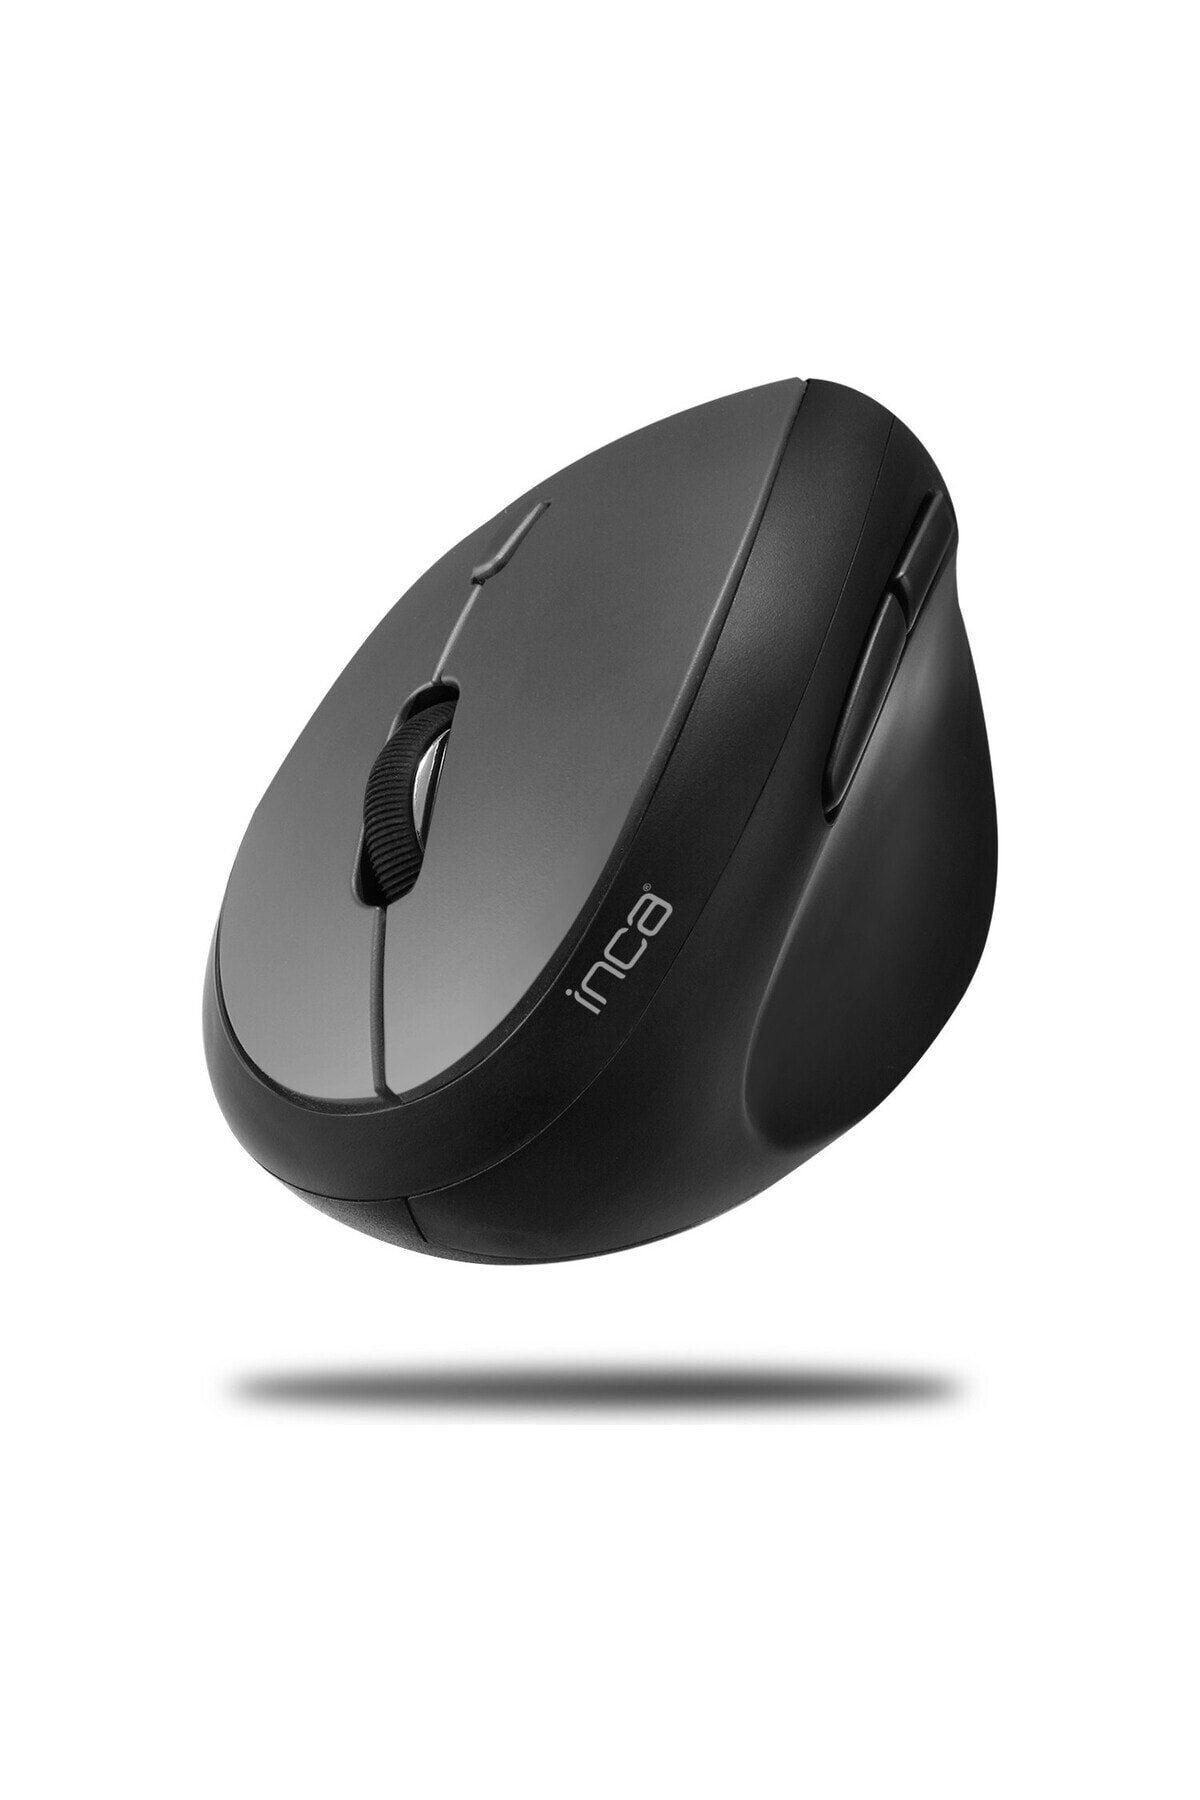 Inca İwm-525 1600 Dpi Silent 6D Siyah Sessiz Wireless Kablosuz Mouse